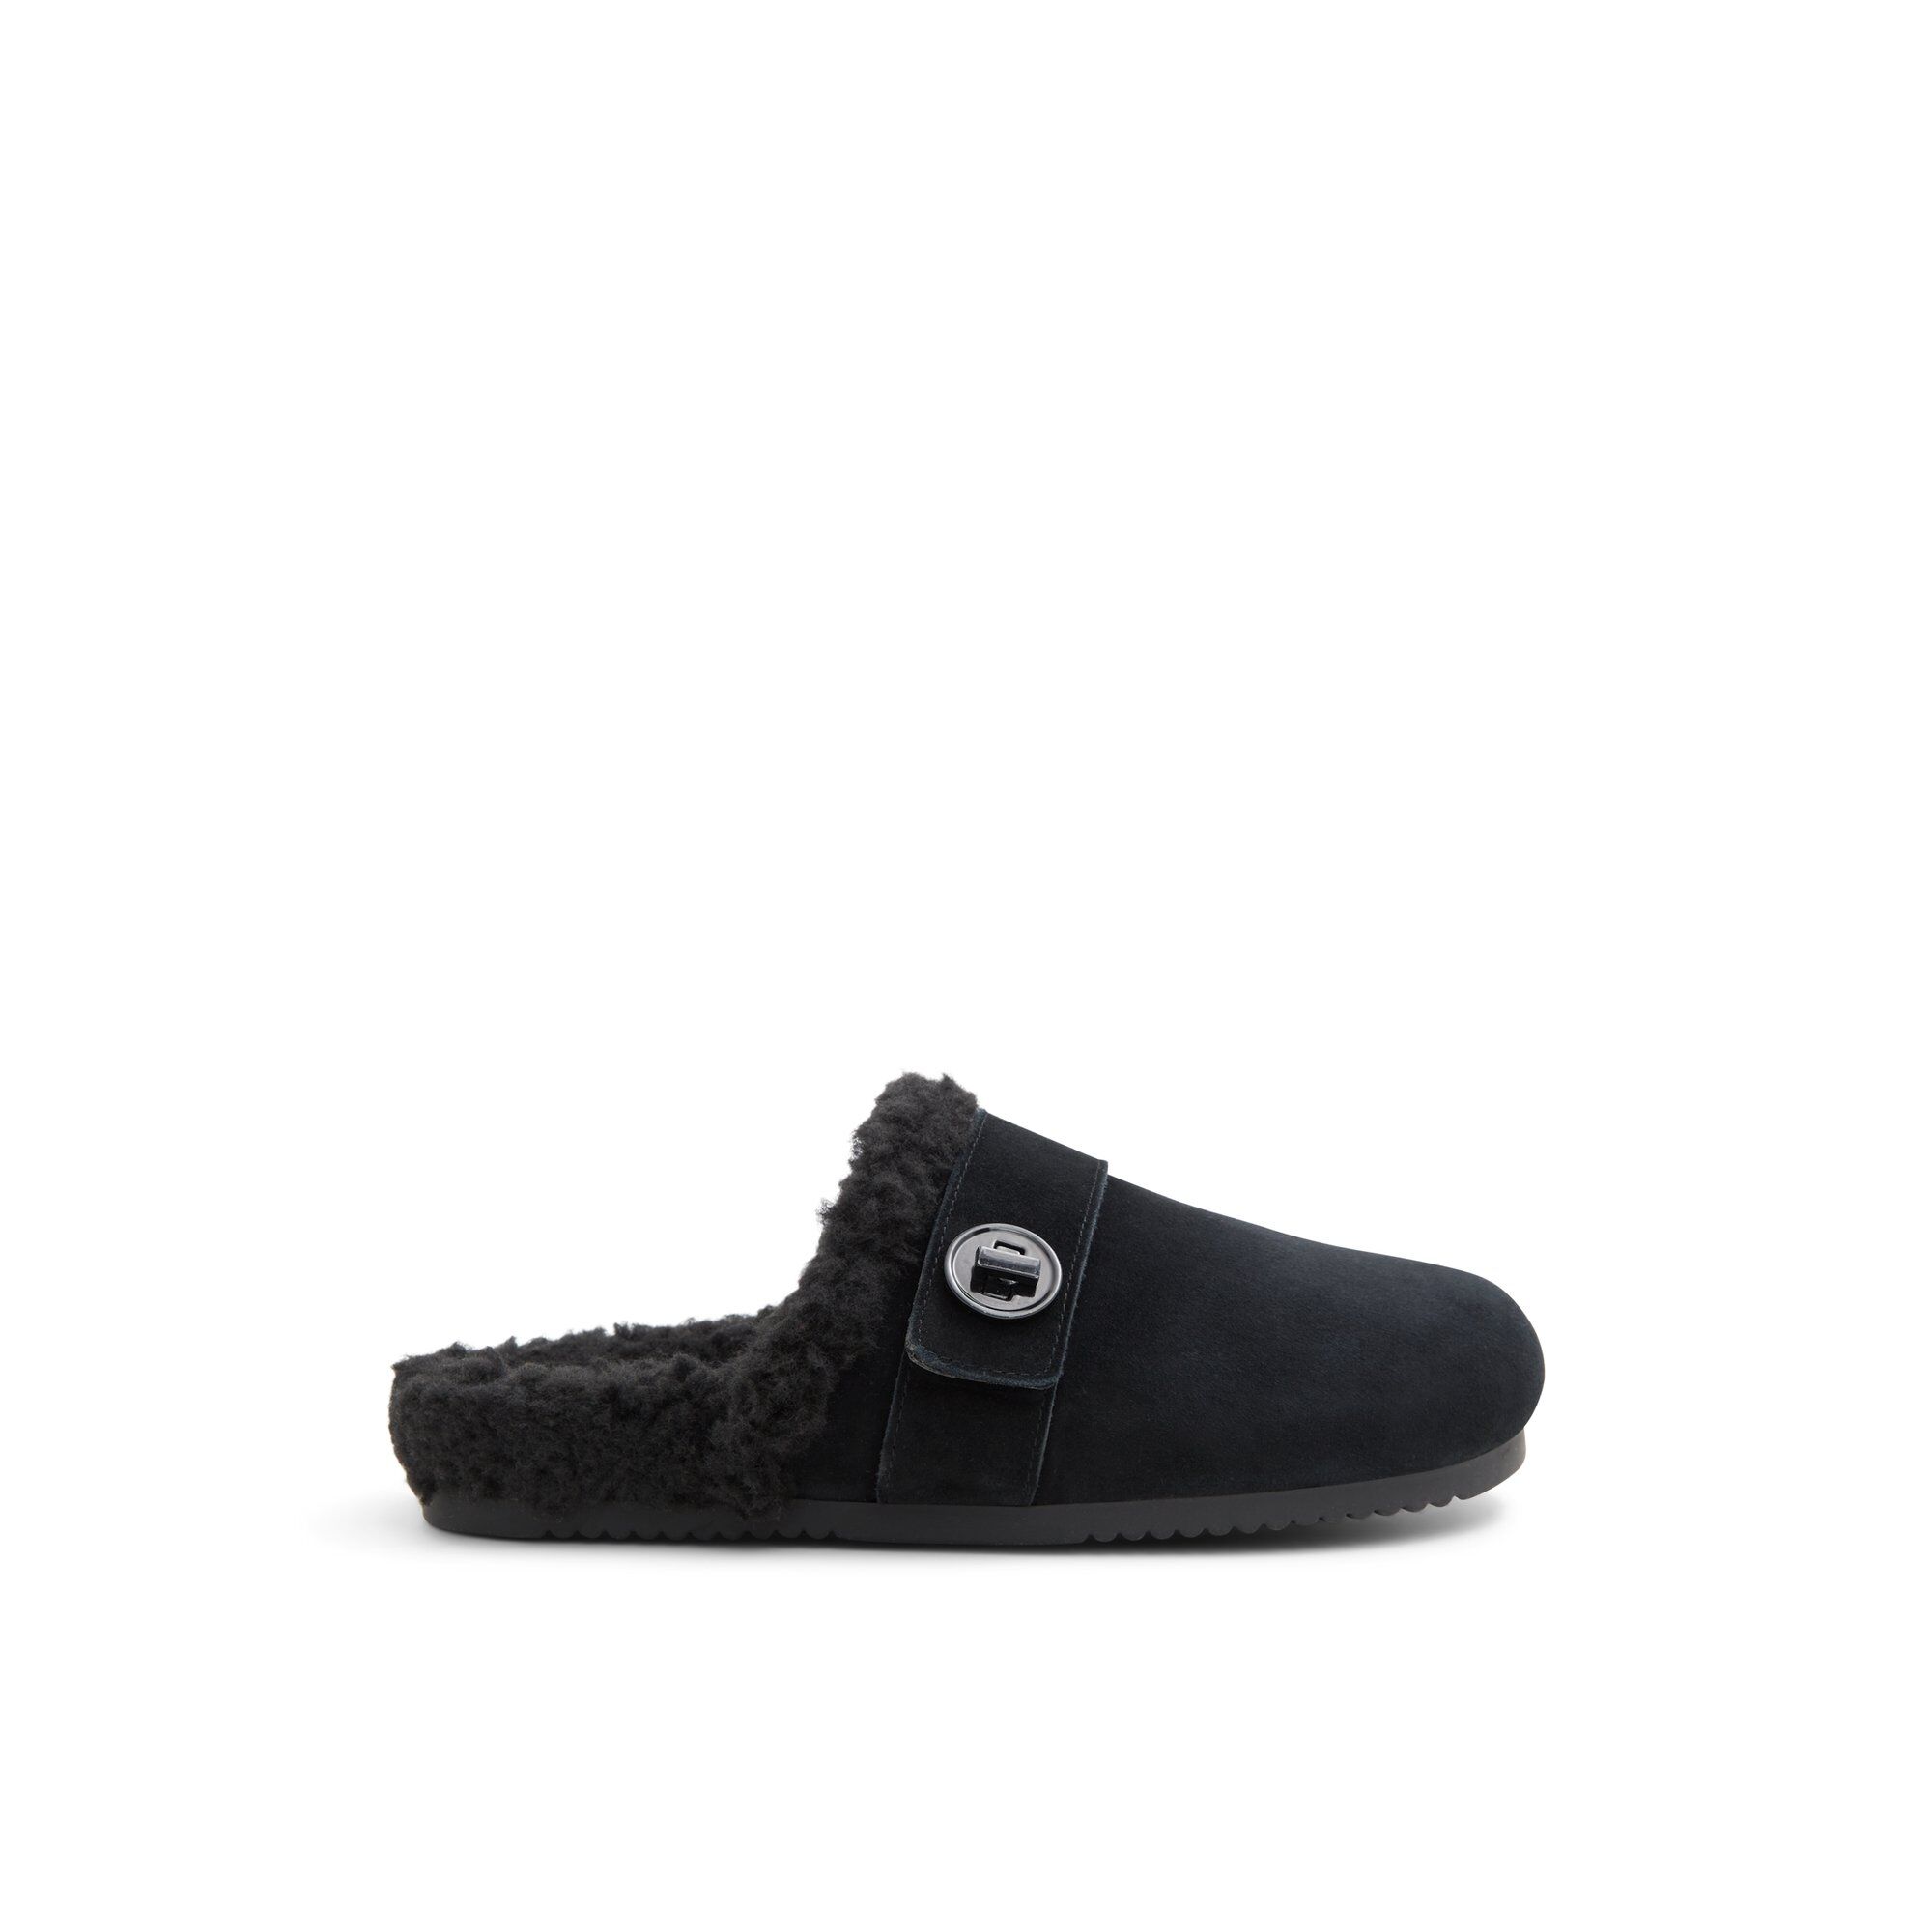 ALDO Fredou - Women's Loafer - Black, Size 8